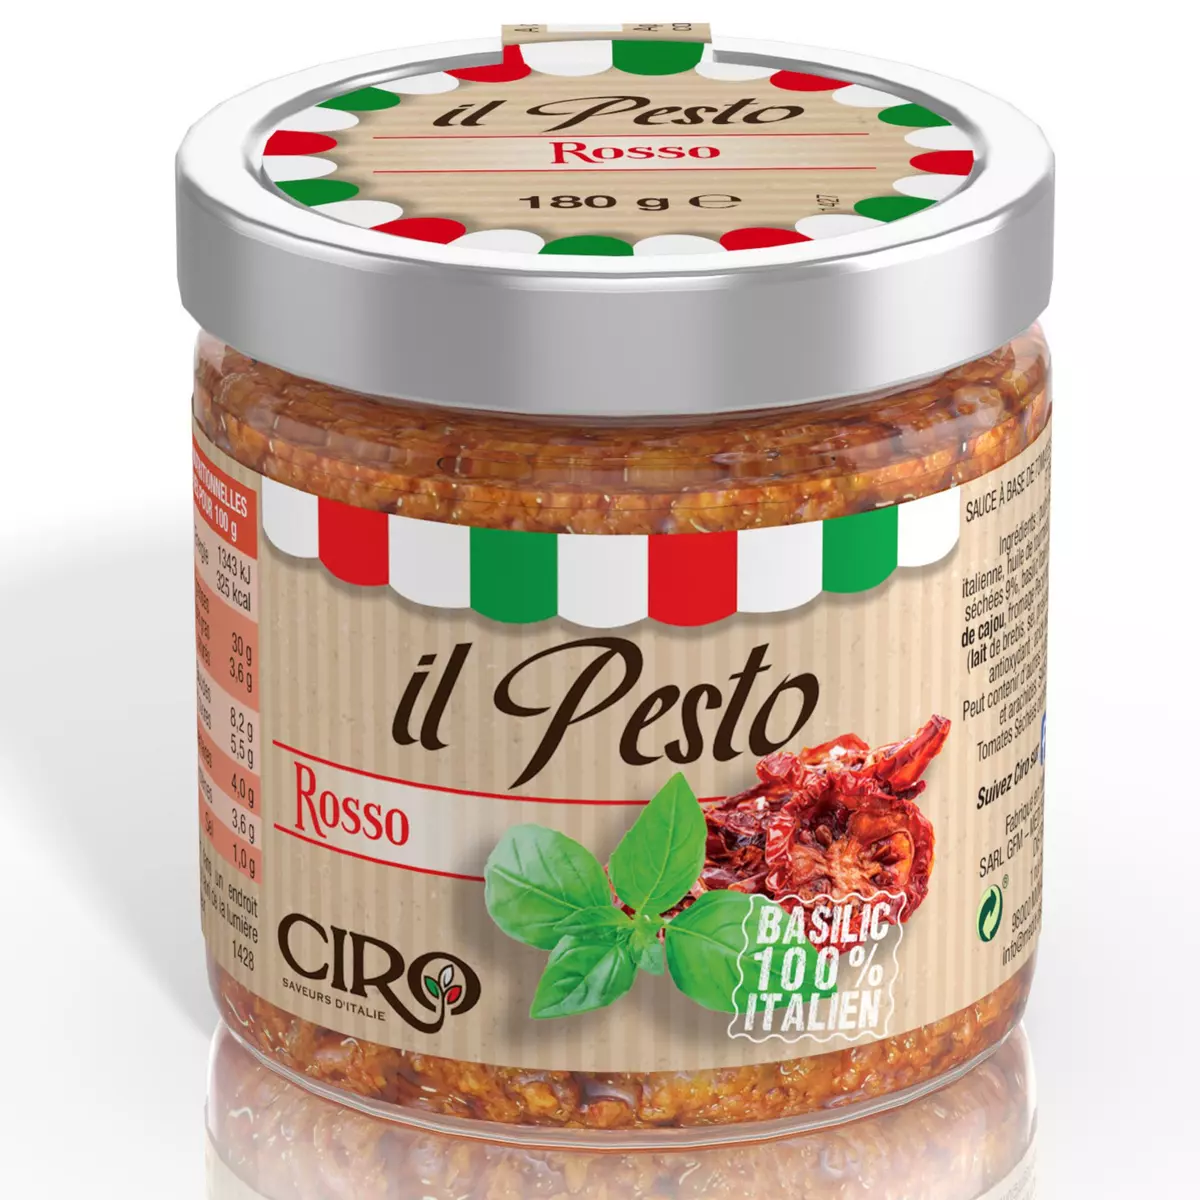 CIRO Sauce pesto rosso 180g